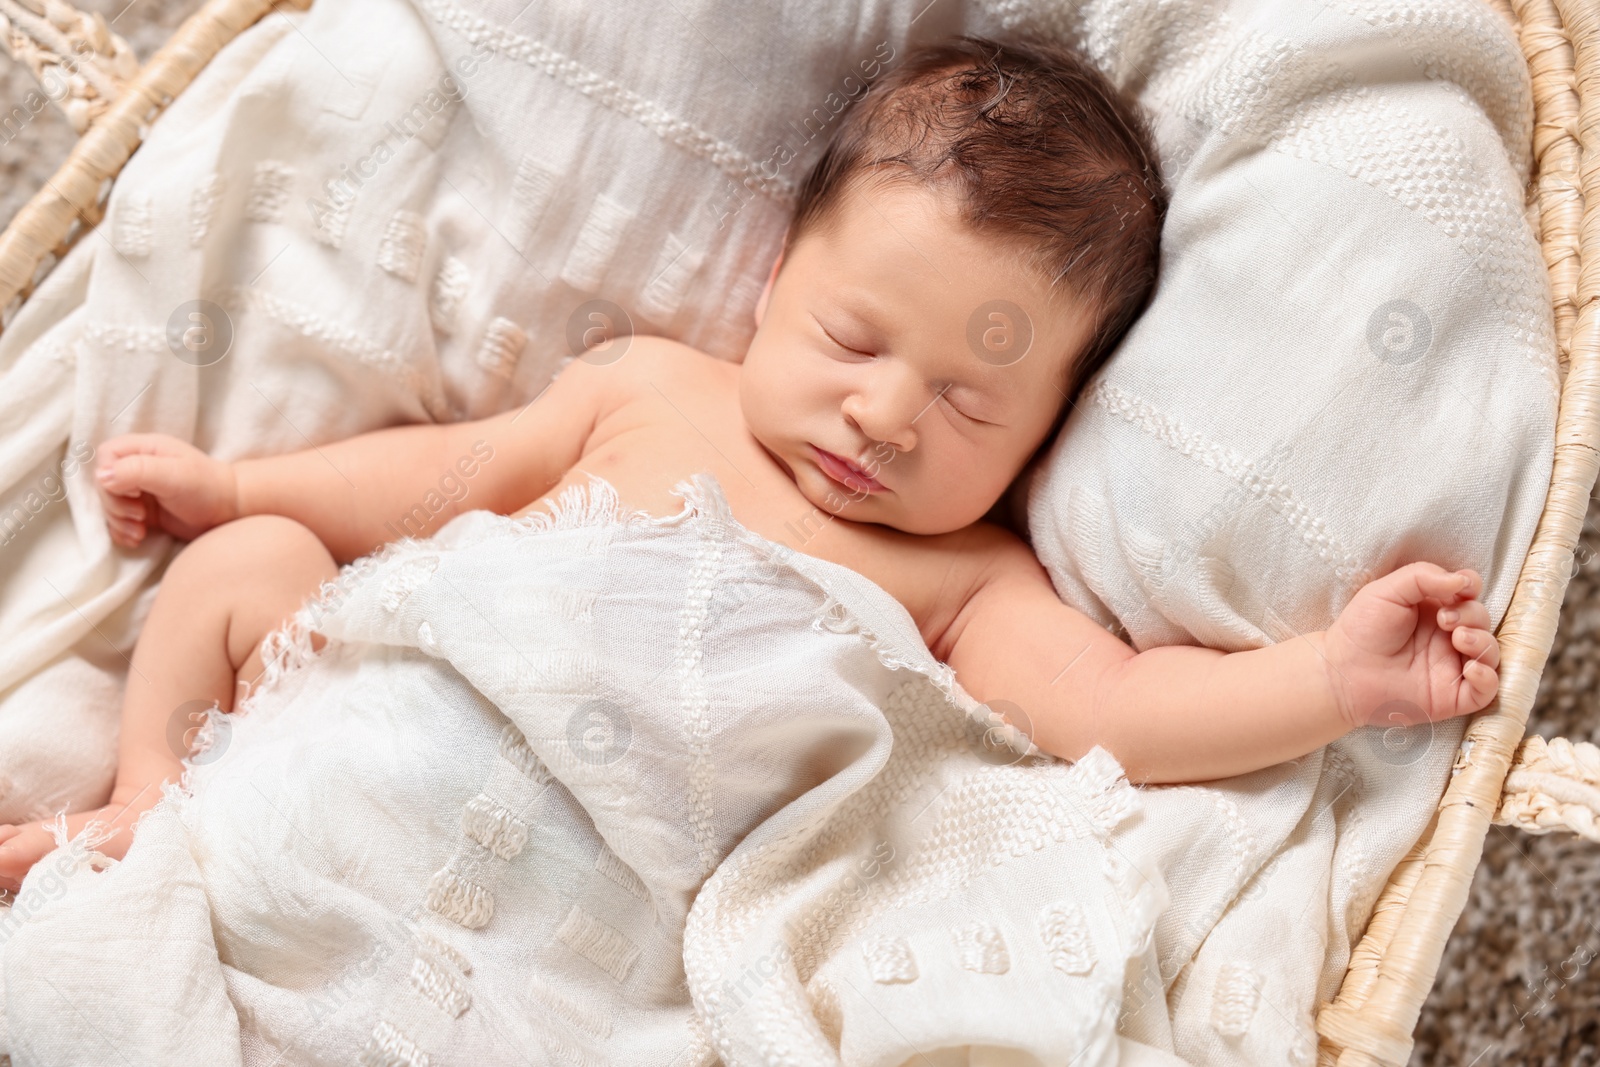 Photo of Cute newborn baby sleeping on white blanket in wicker crib